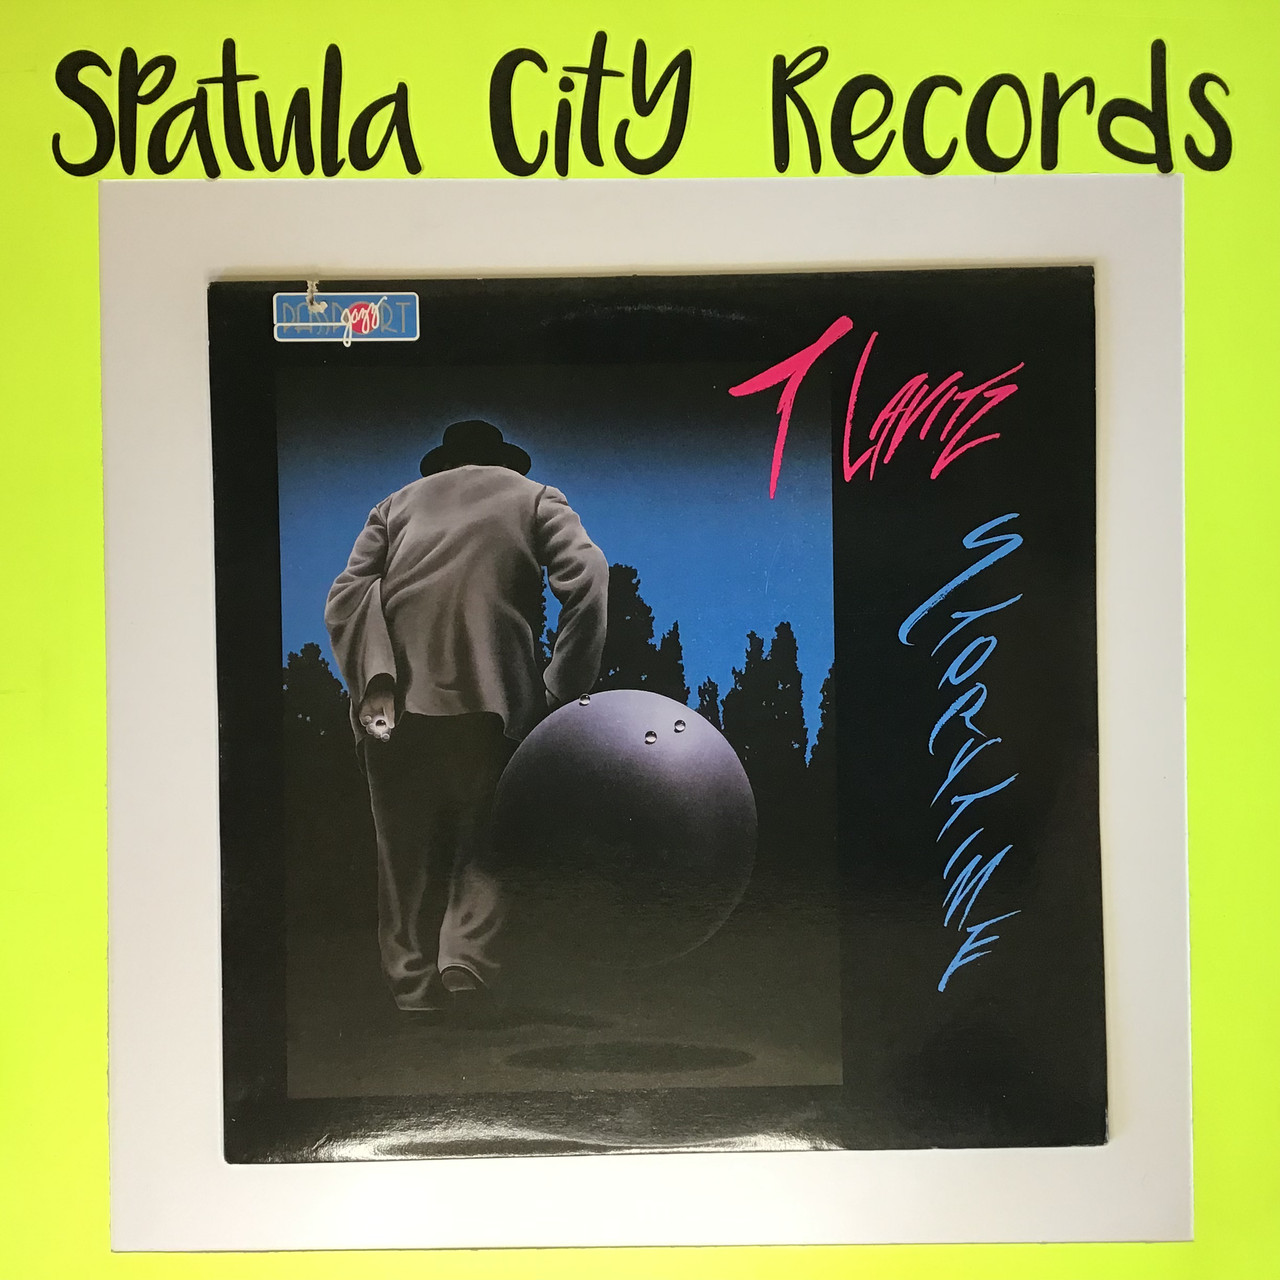 T Lavitz - Storytime - vinyl record album LP